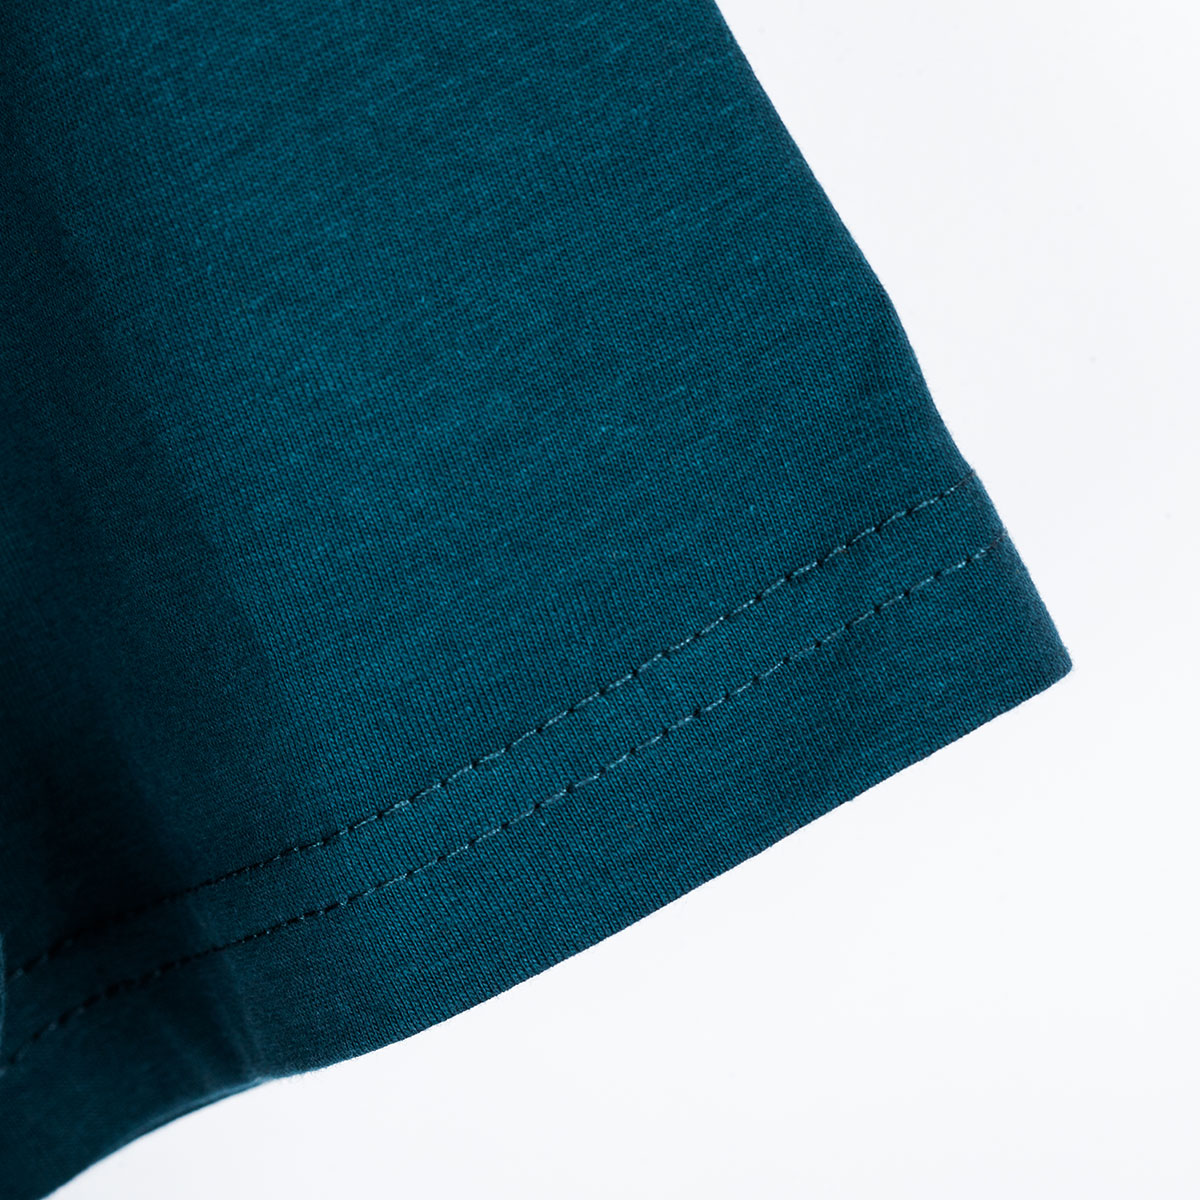 Short Sleeve T-Shirt - 100% Organic (Unisex)